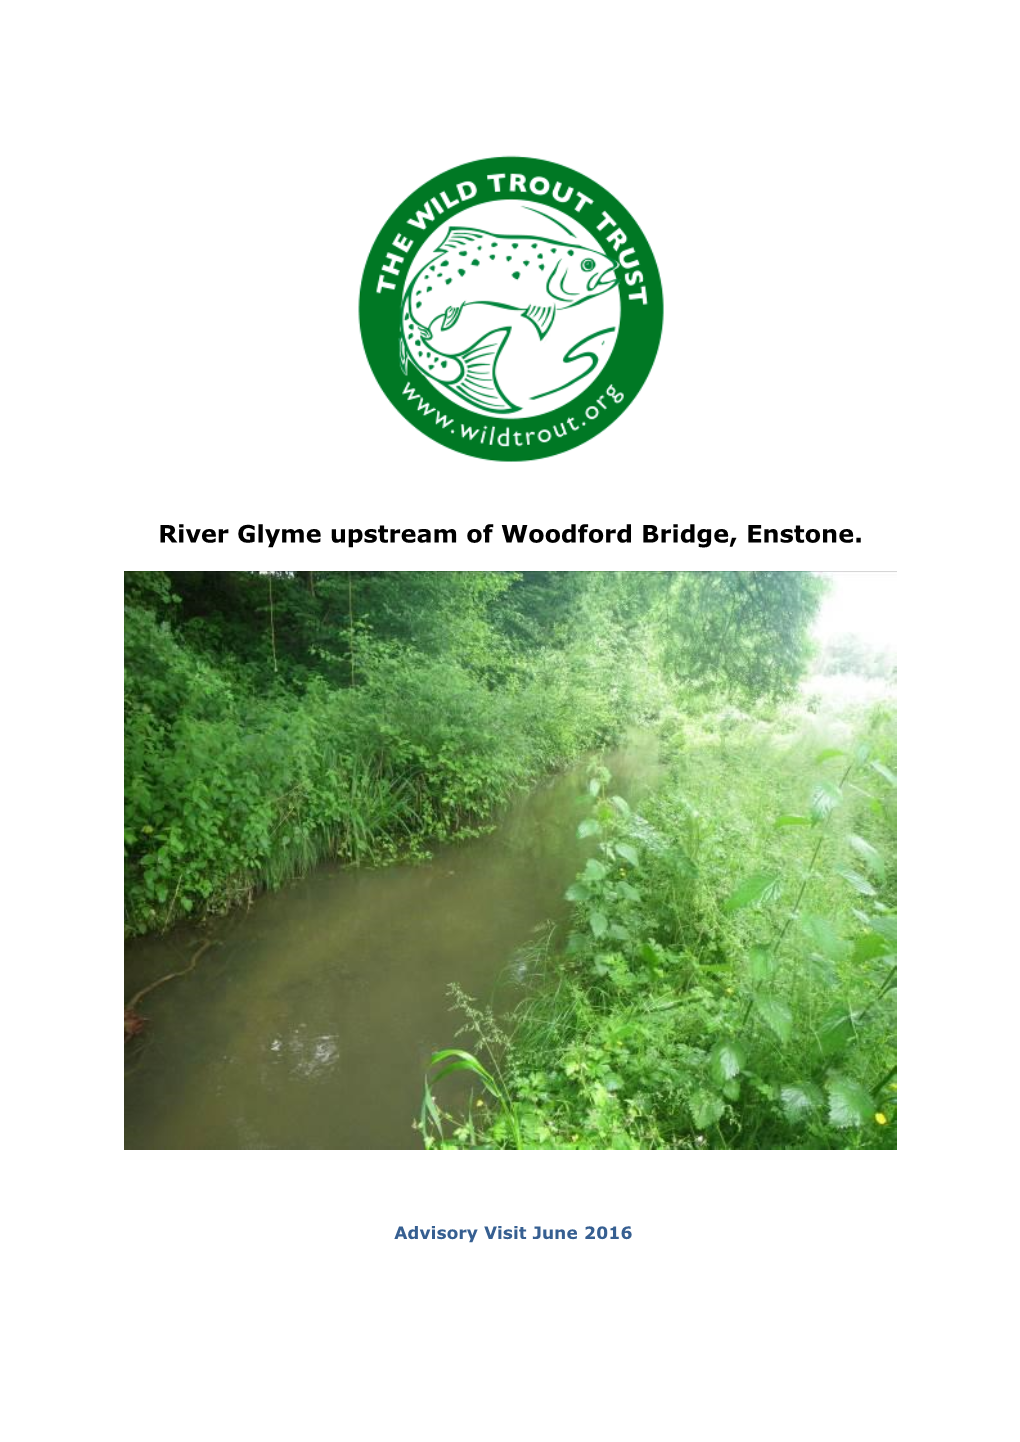 River Glyme Upstream of Woodford Bridge, Enstone